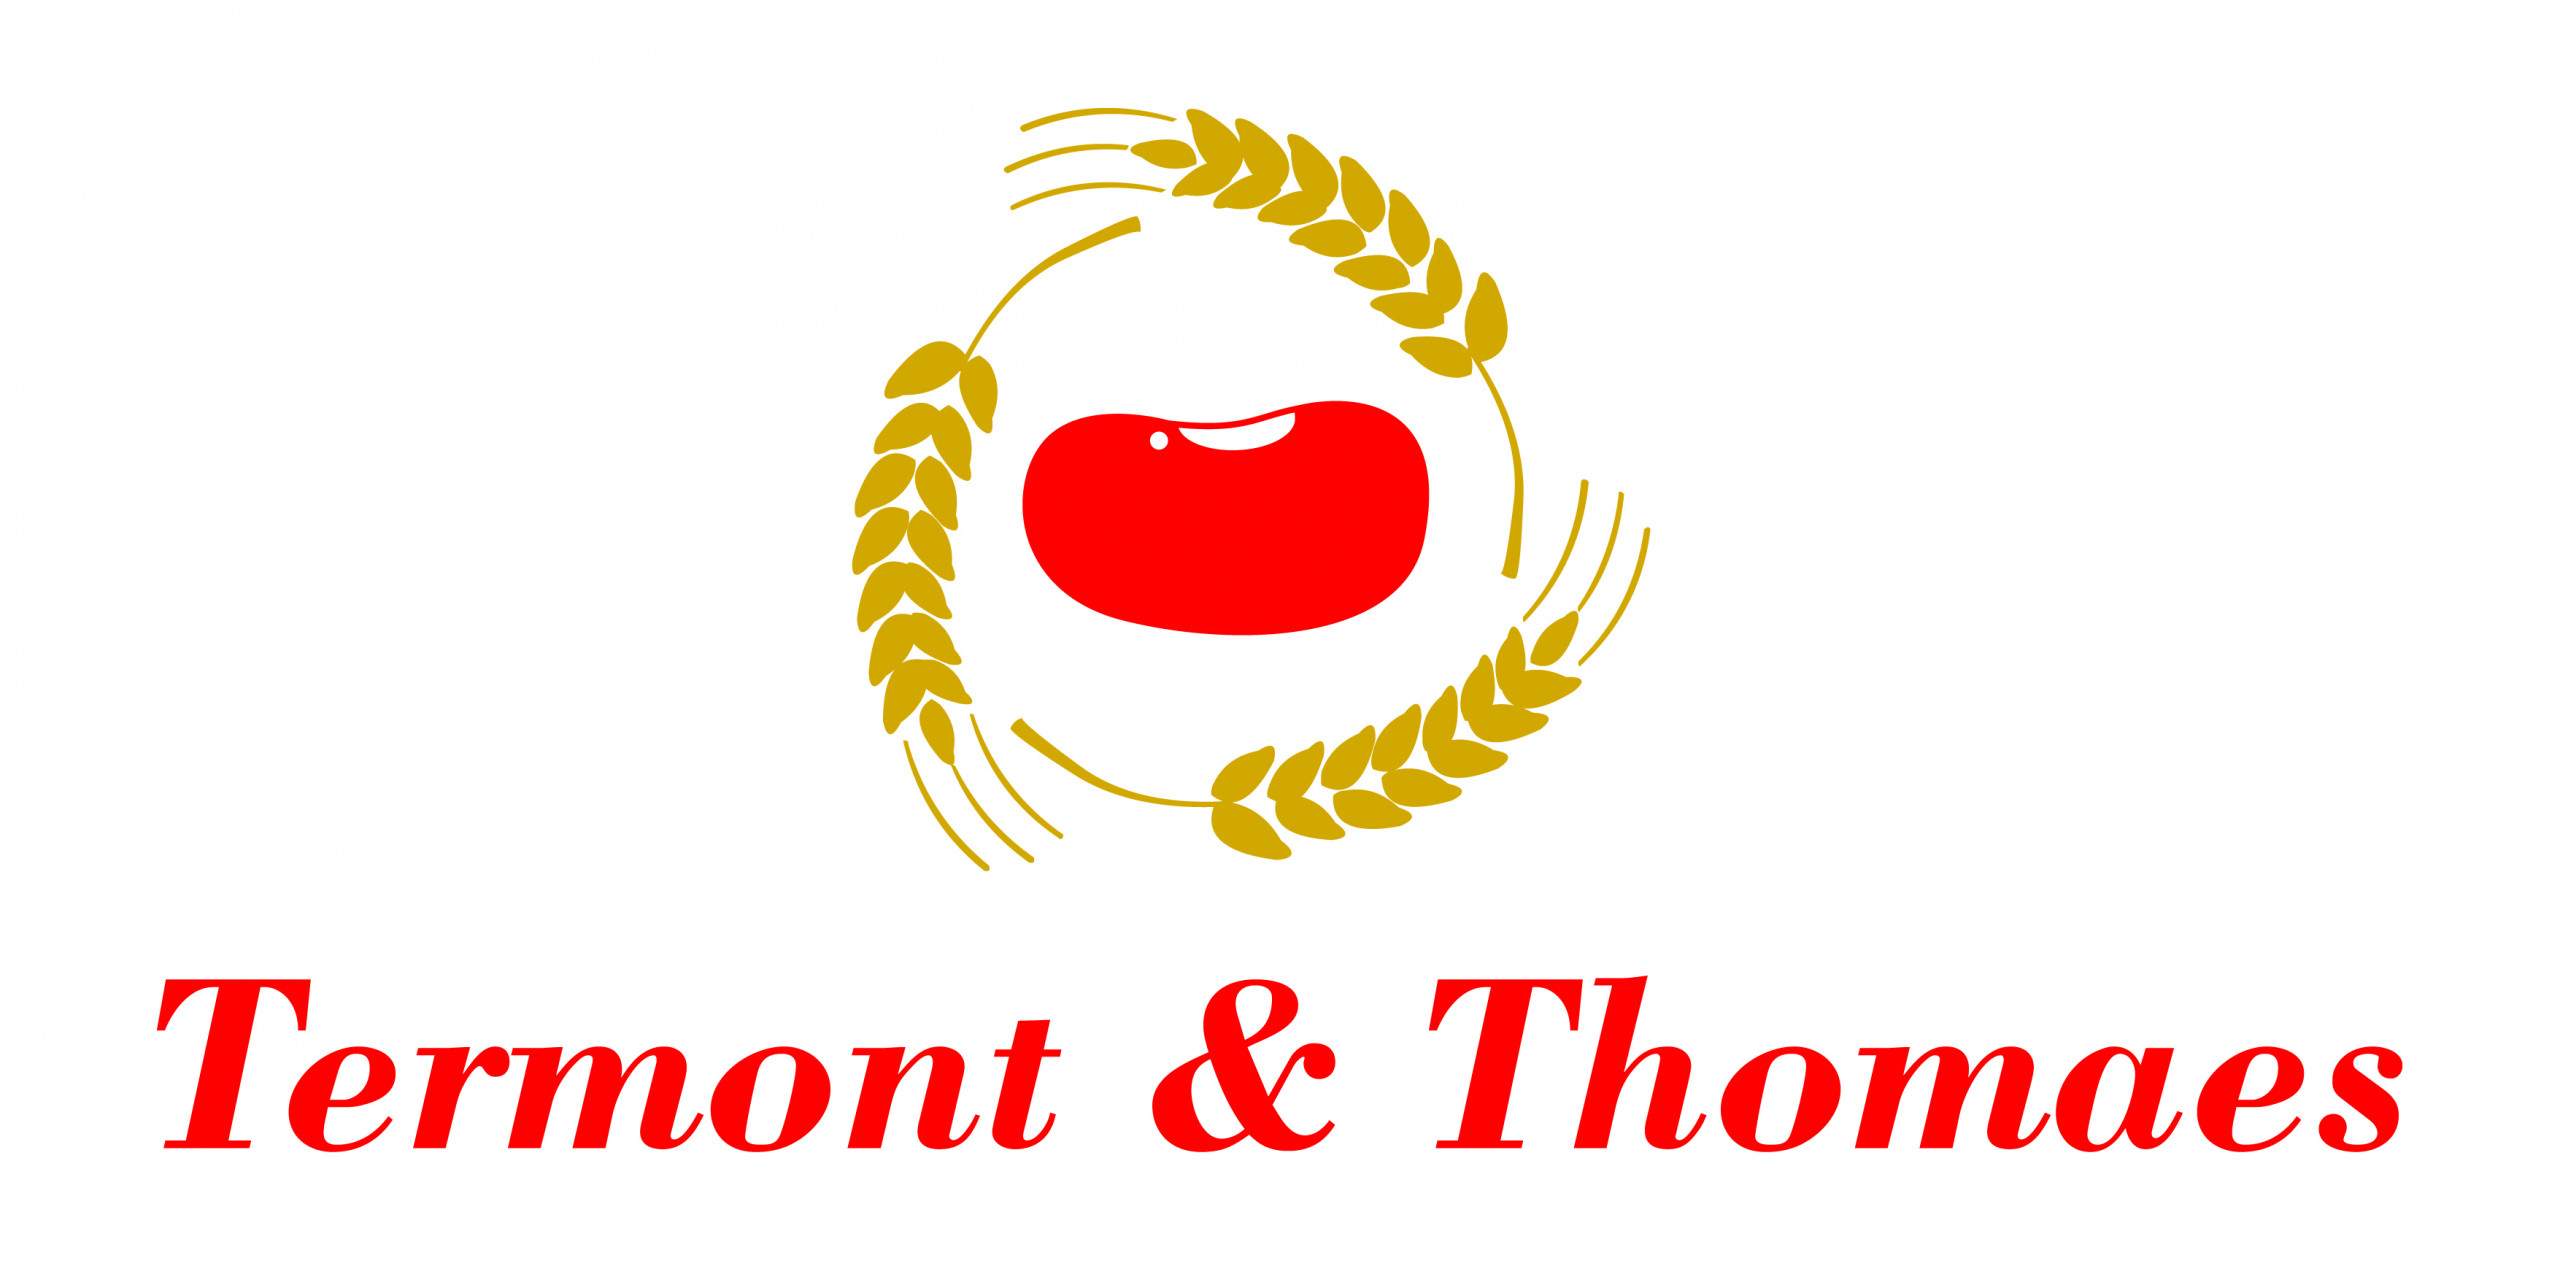 DONE_TermontThomaes-logo-fc